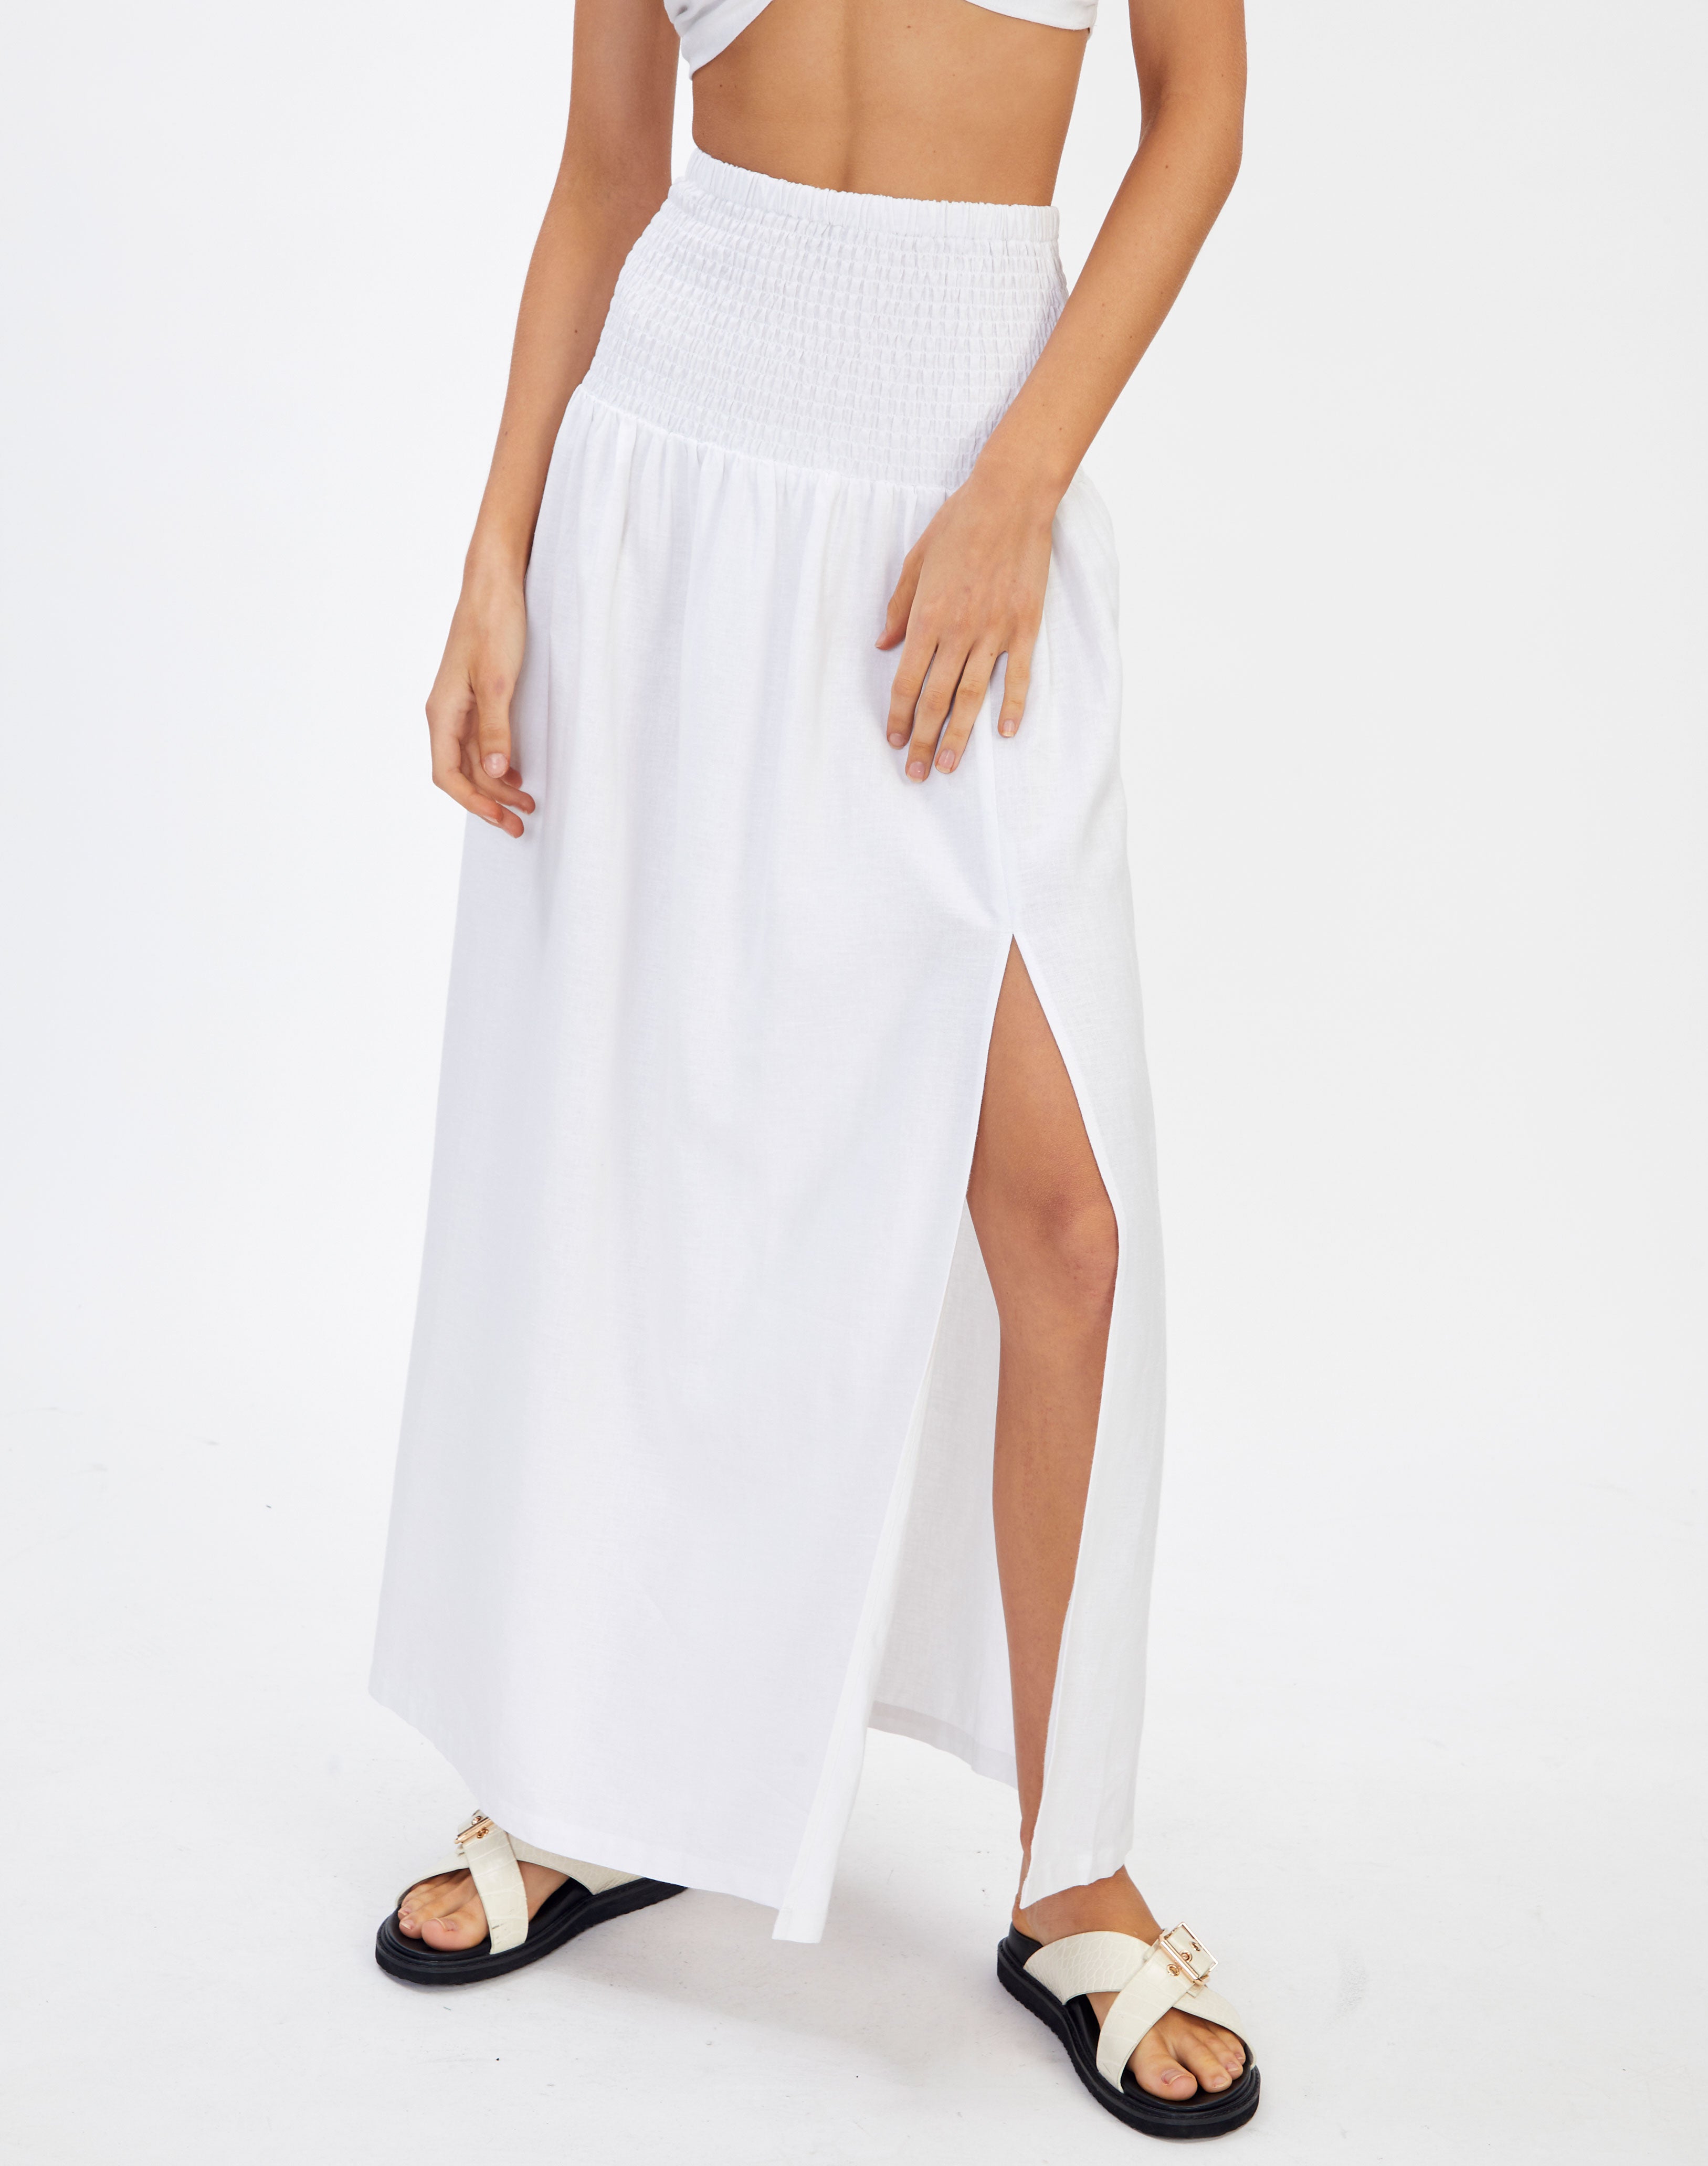 white maxi skirt cheap